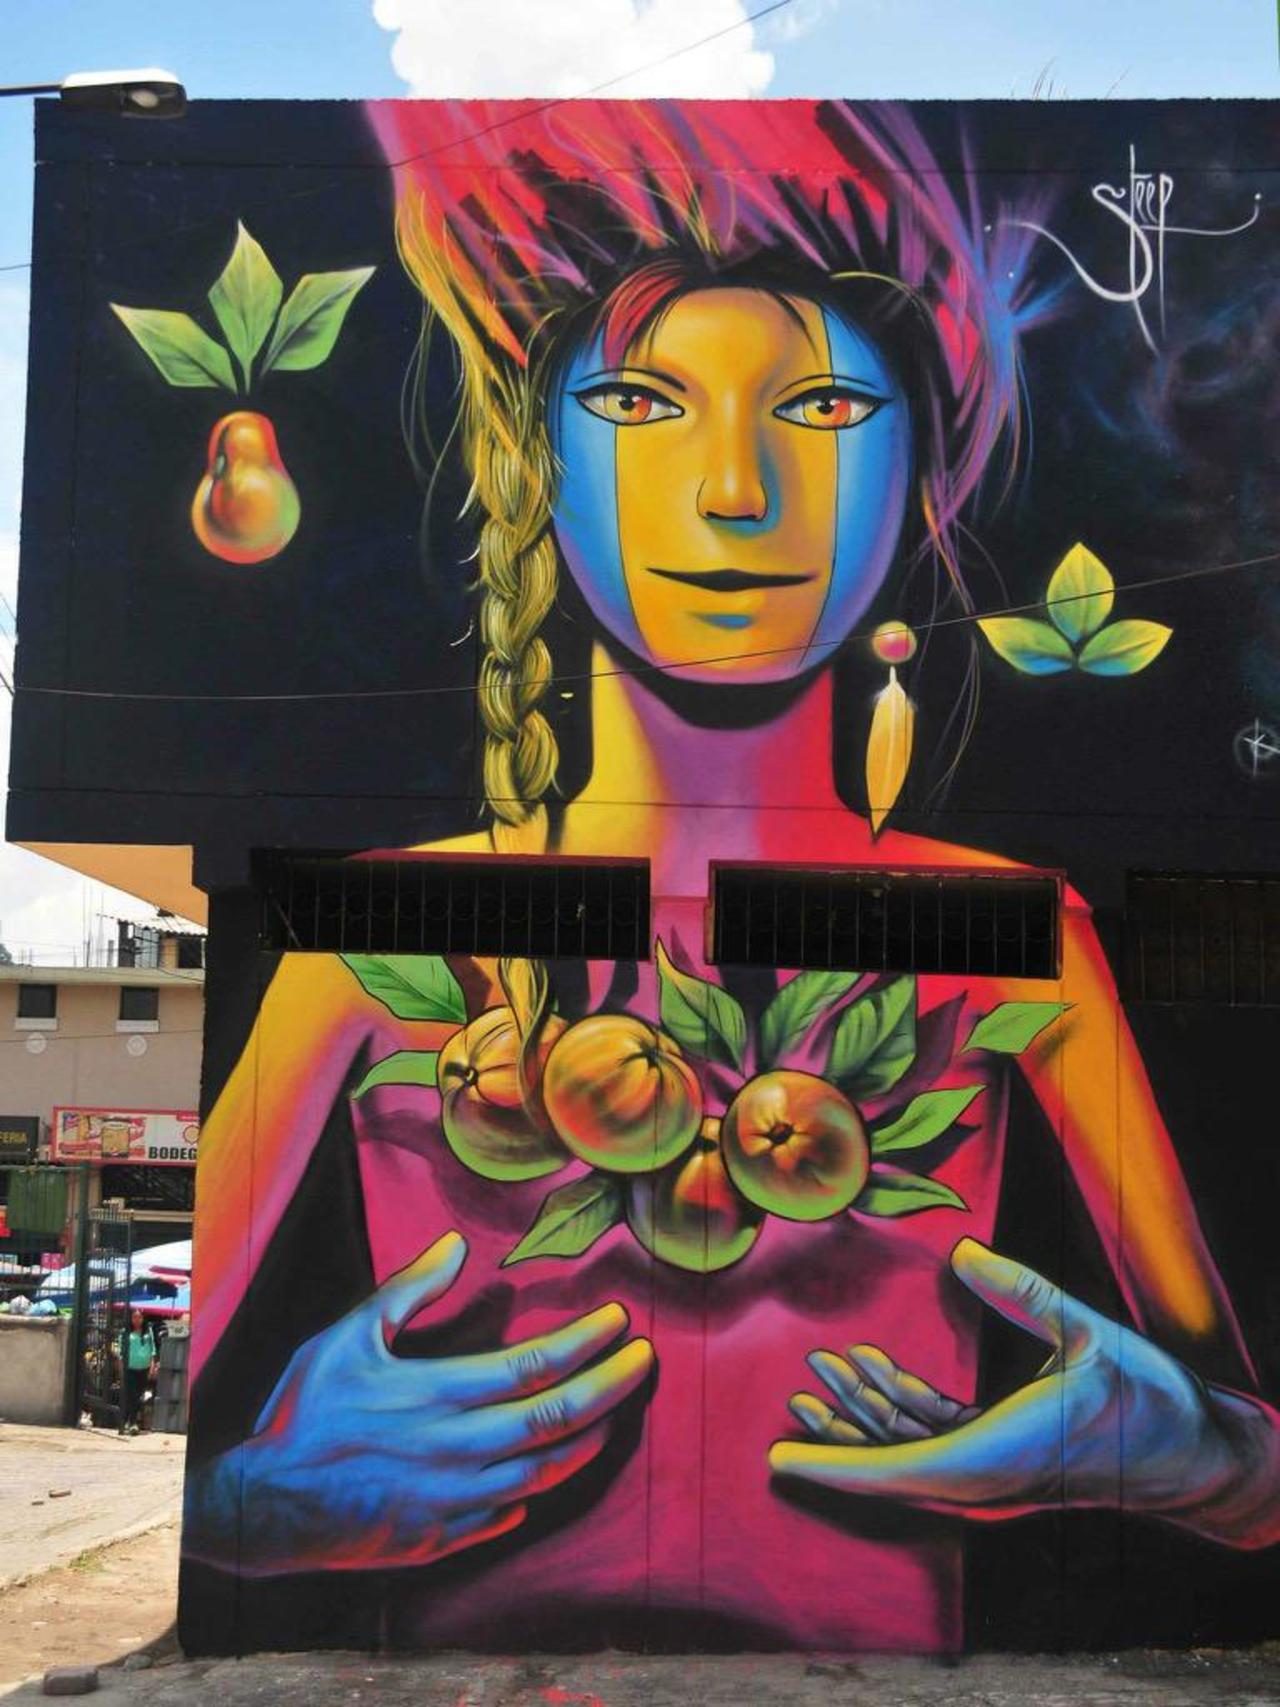 Street Art by Steep #art #graffiti #mural #streetart http://t.co/dKGIfl0HiR http://twitter.com/GoogleStreetArt/status/652717552435638272/photo/1/large?utm_source=fb&utm_medium=fb&utm_campaign=charlesjackso14&utm_content=652720469402103808 … … … … … http://twitter.com/charlesjackso14/status/652732464625025024